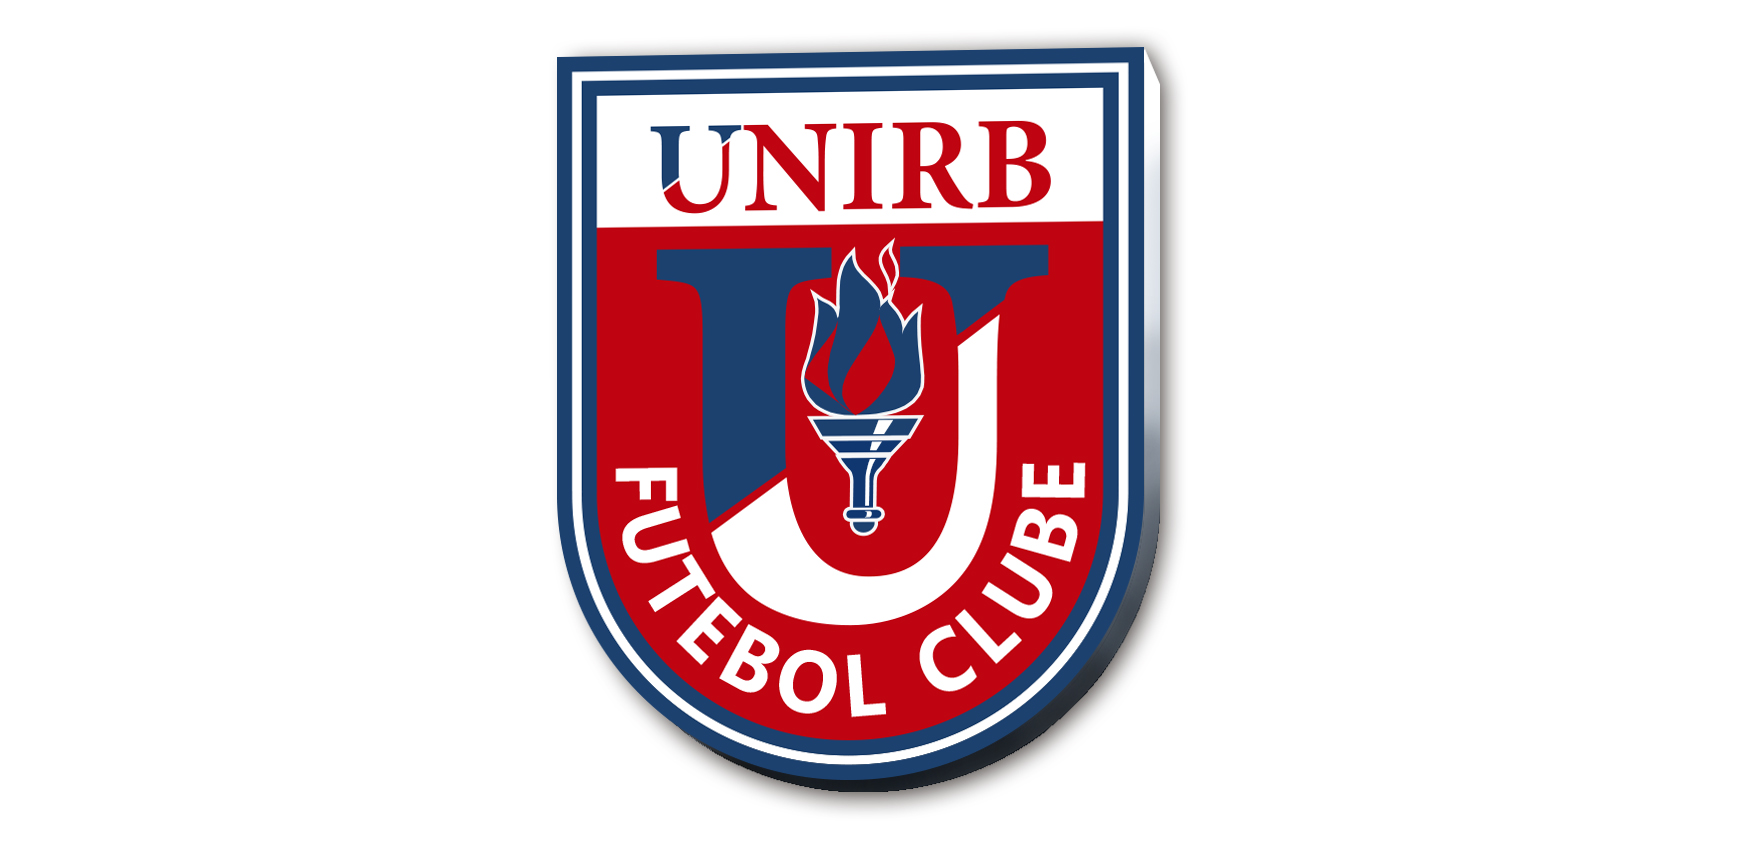 UNIRB lança time de futebol profissional